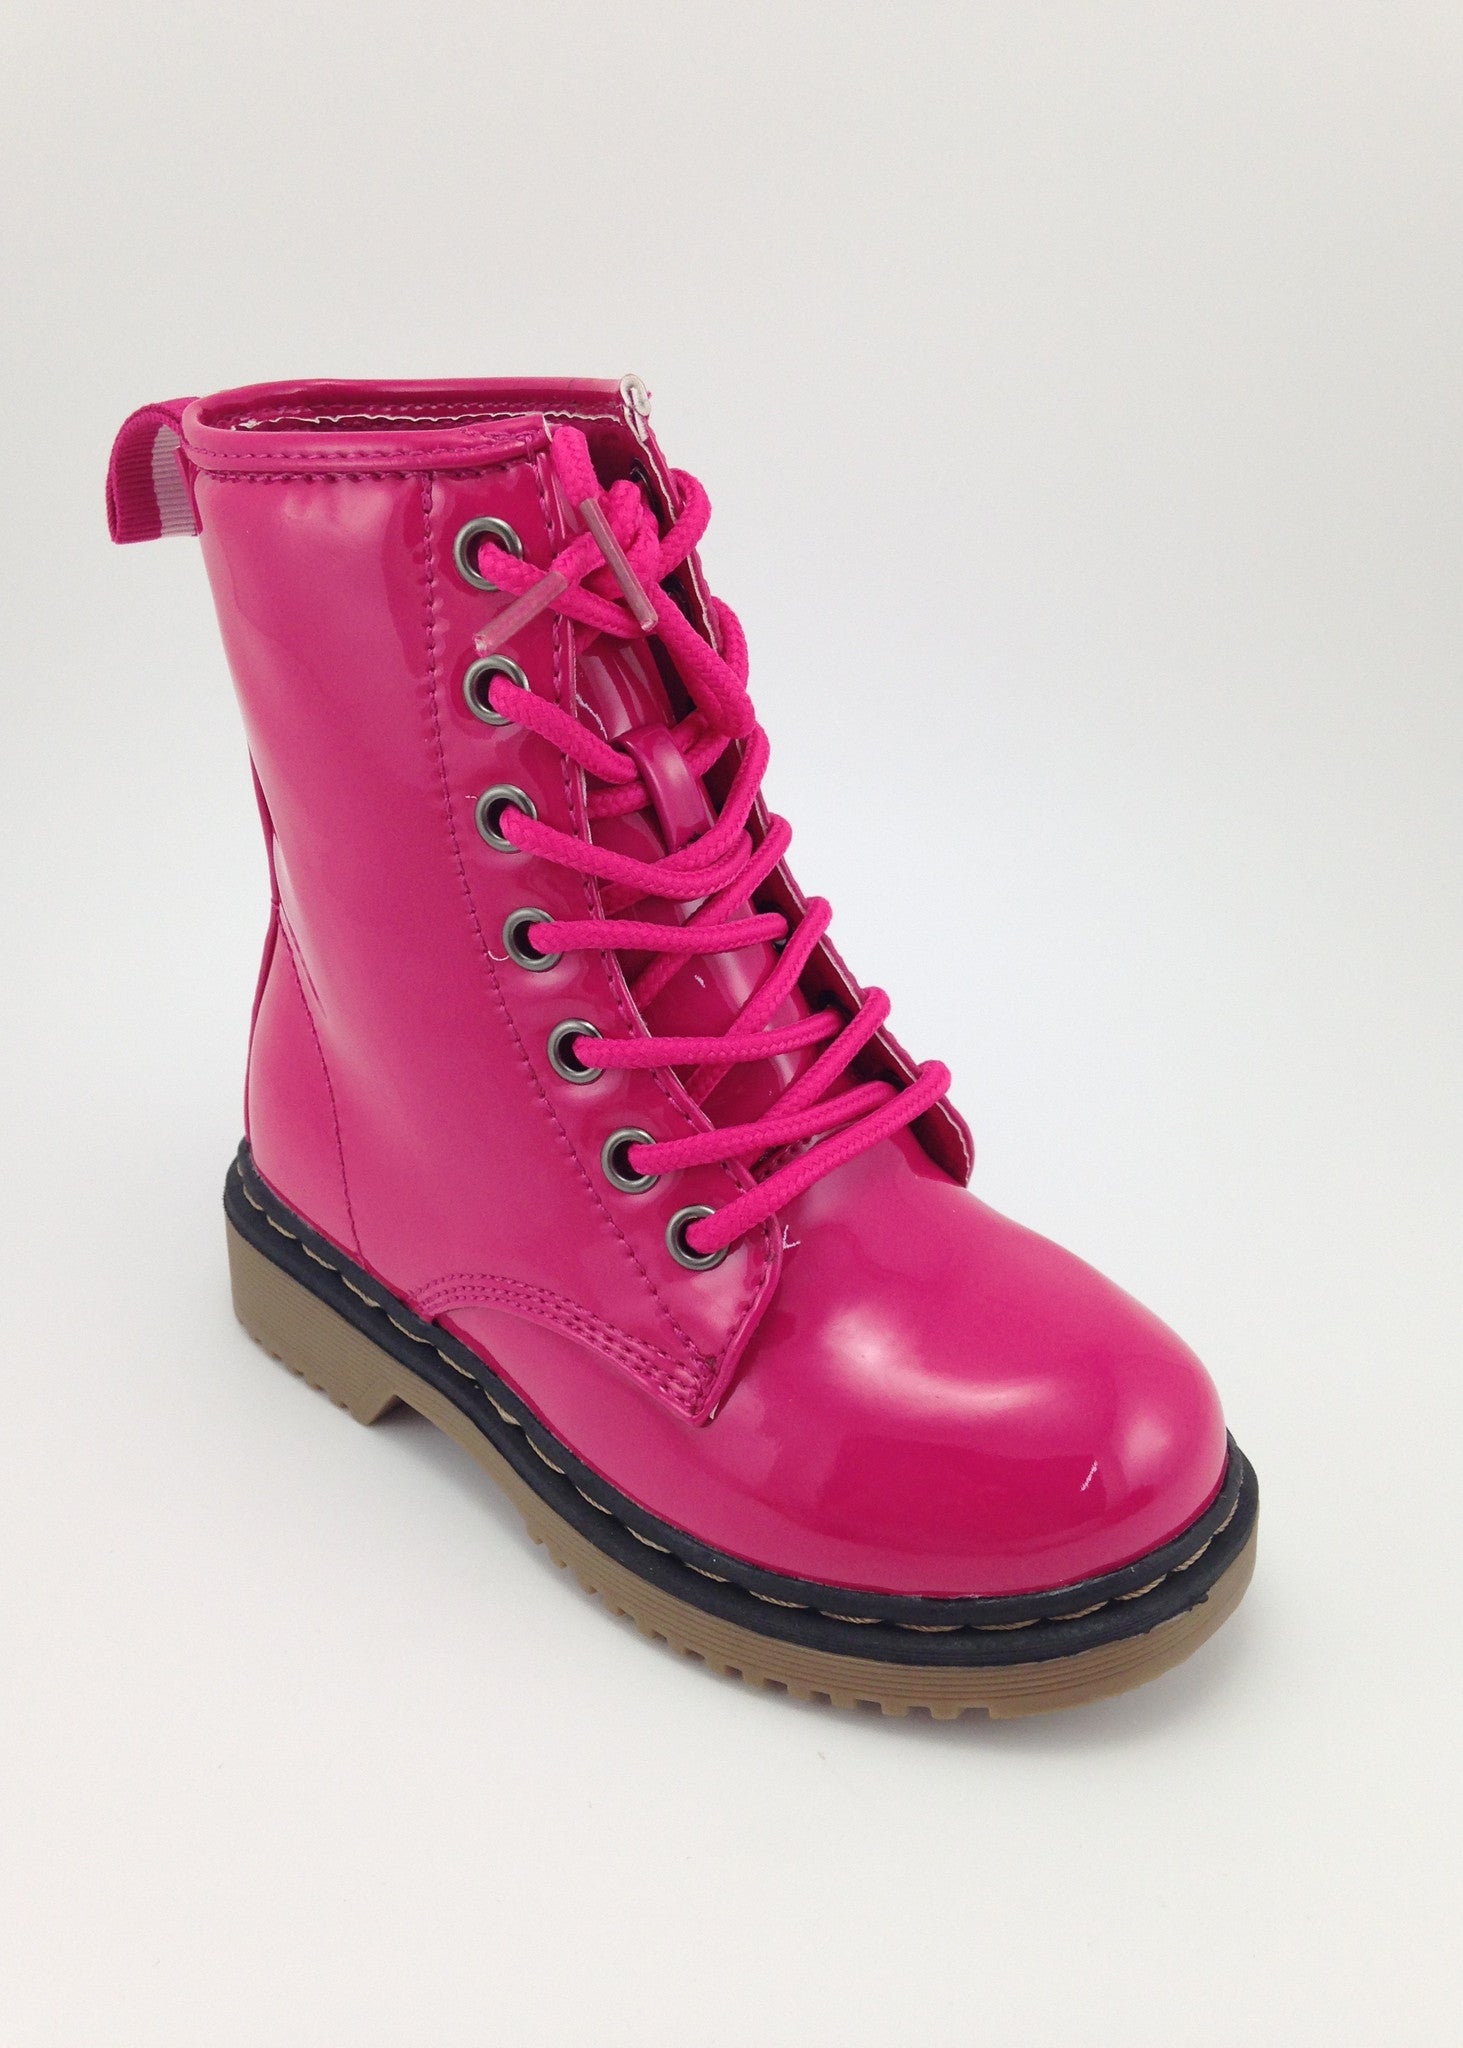 Girls Shoes | Girls Pink Patent Boots | Kids Boots - Liberty Lark LLC